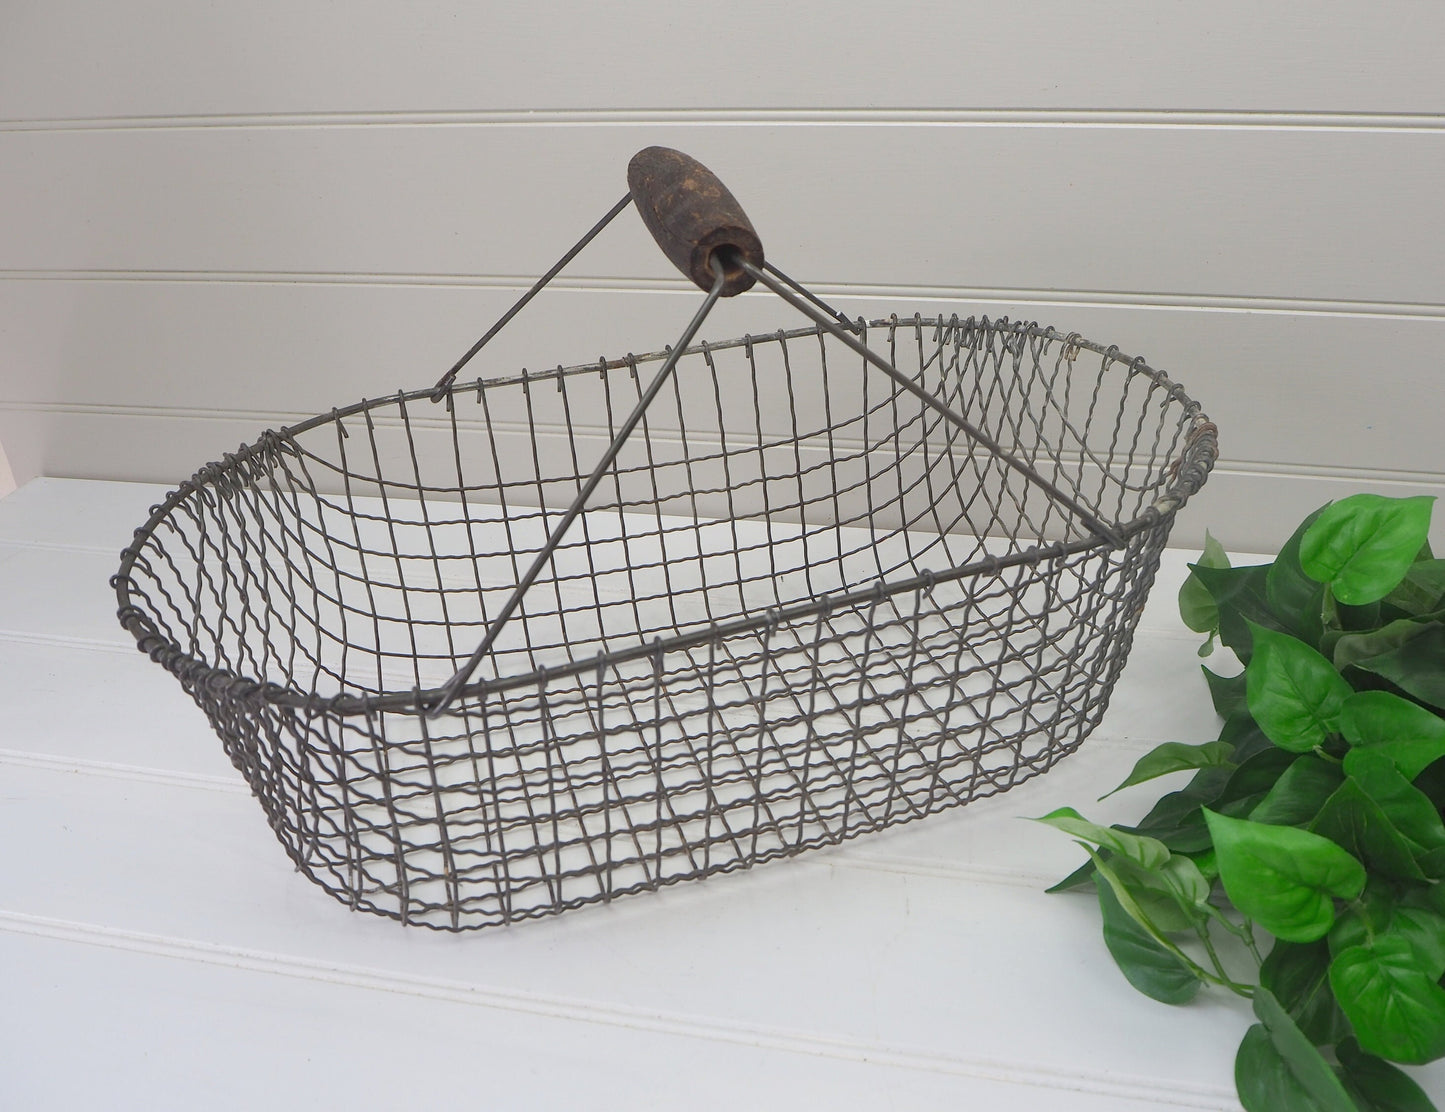 Large antique French oyster basket Wood handle Wire trug Vintage 1900s